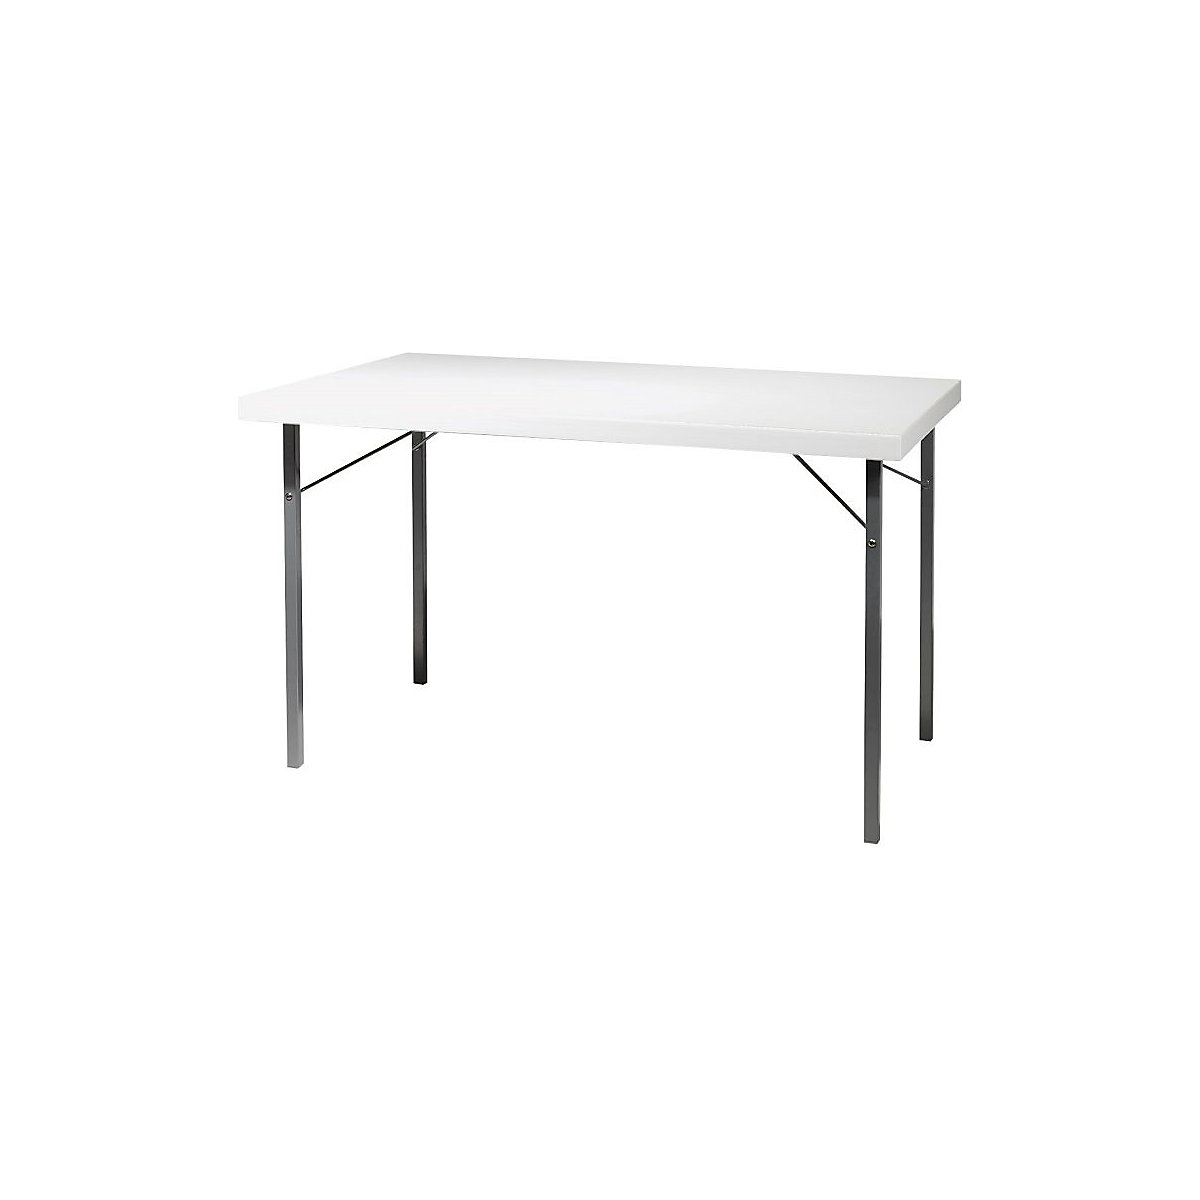 Folding table, metal frame, aluminium silver, WxD 1200 x 800 mm, white laminate tabletop-1